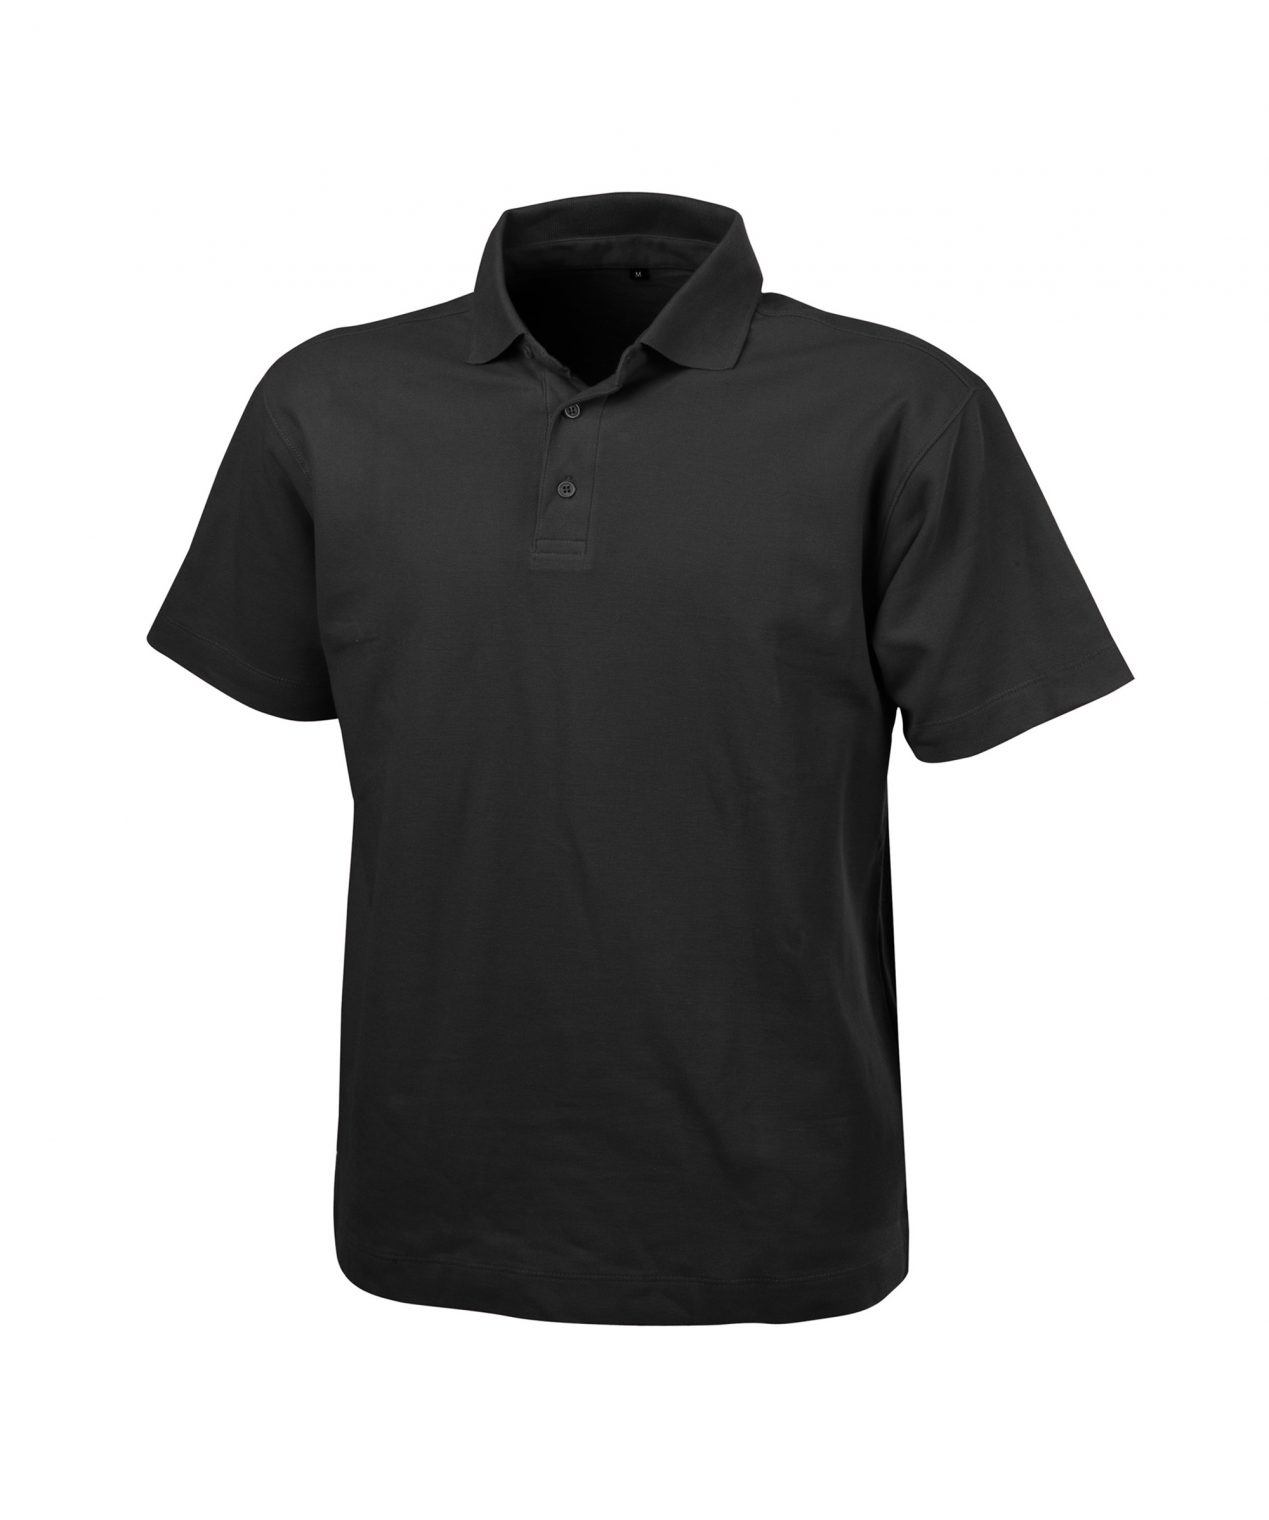 leon polo shirt black front